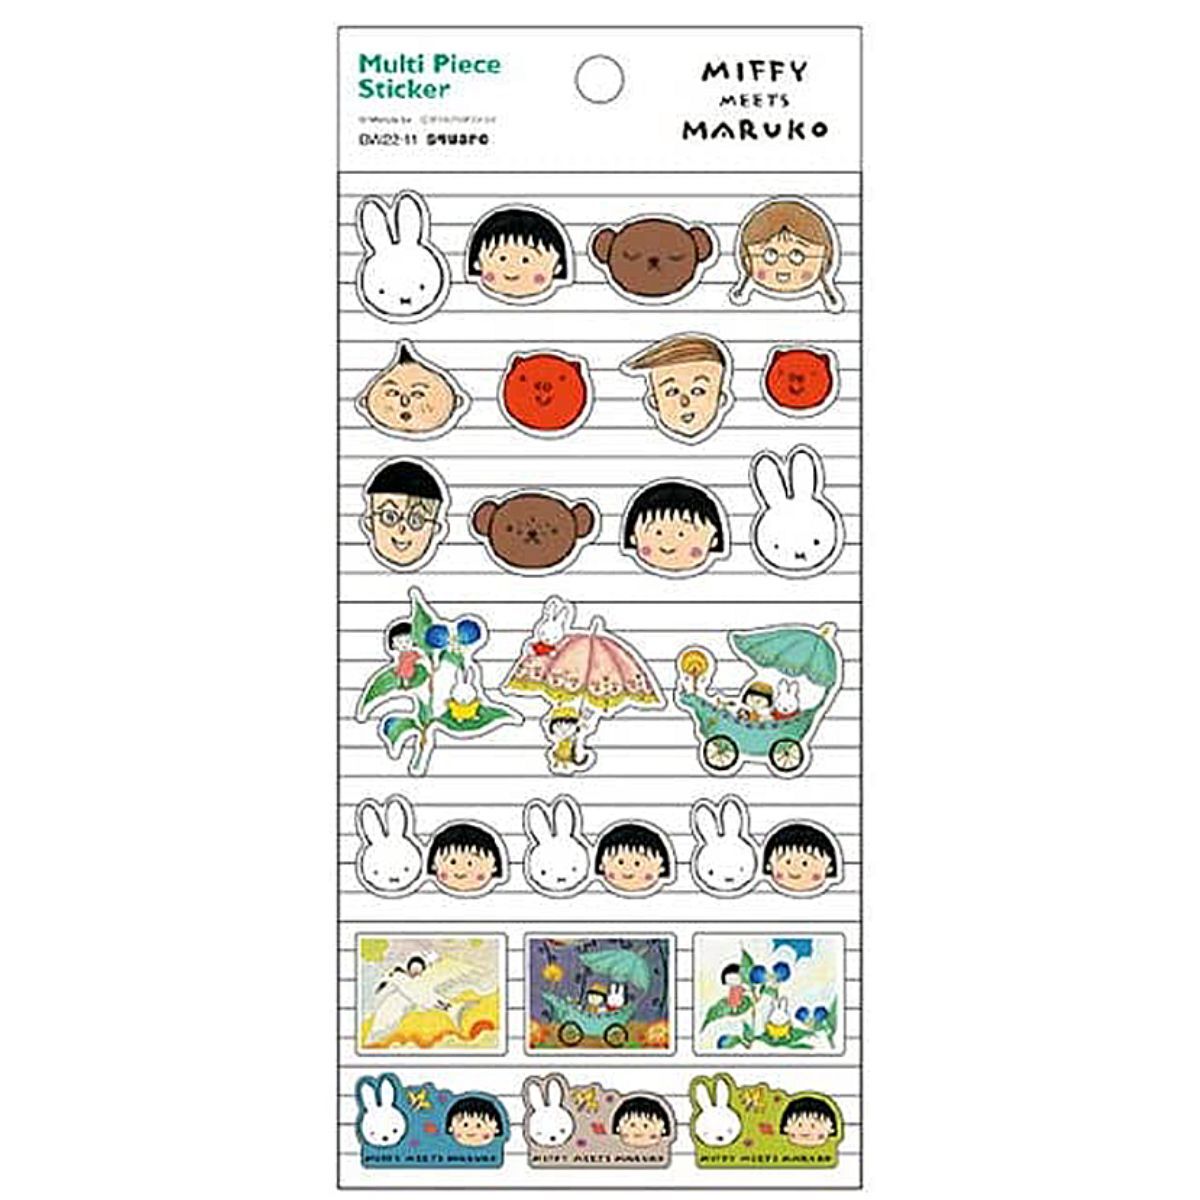 Miffy Multi Piece Sticker by Square (Miffy Meets Maruko Series